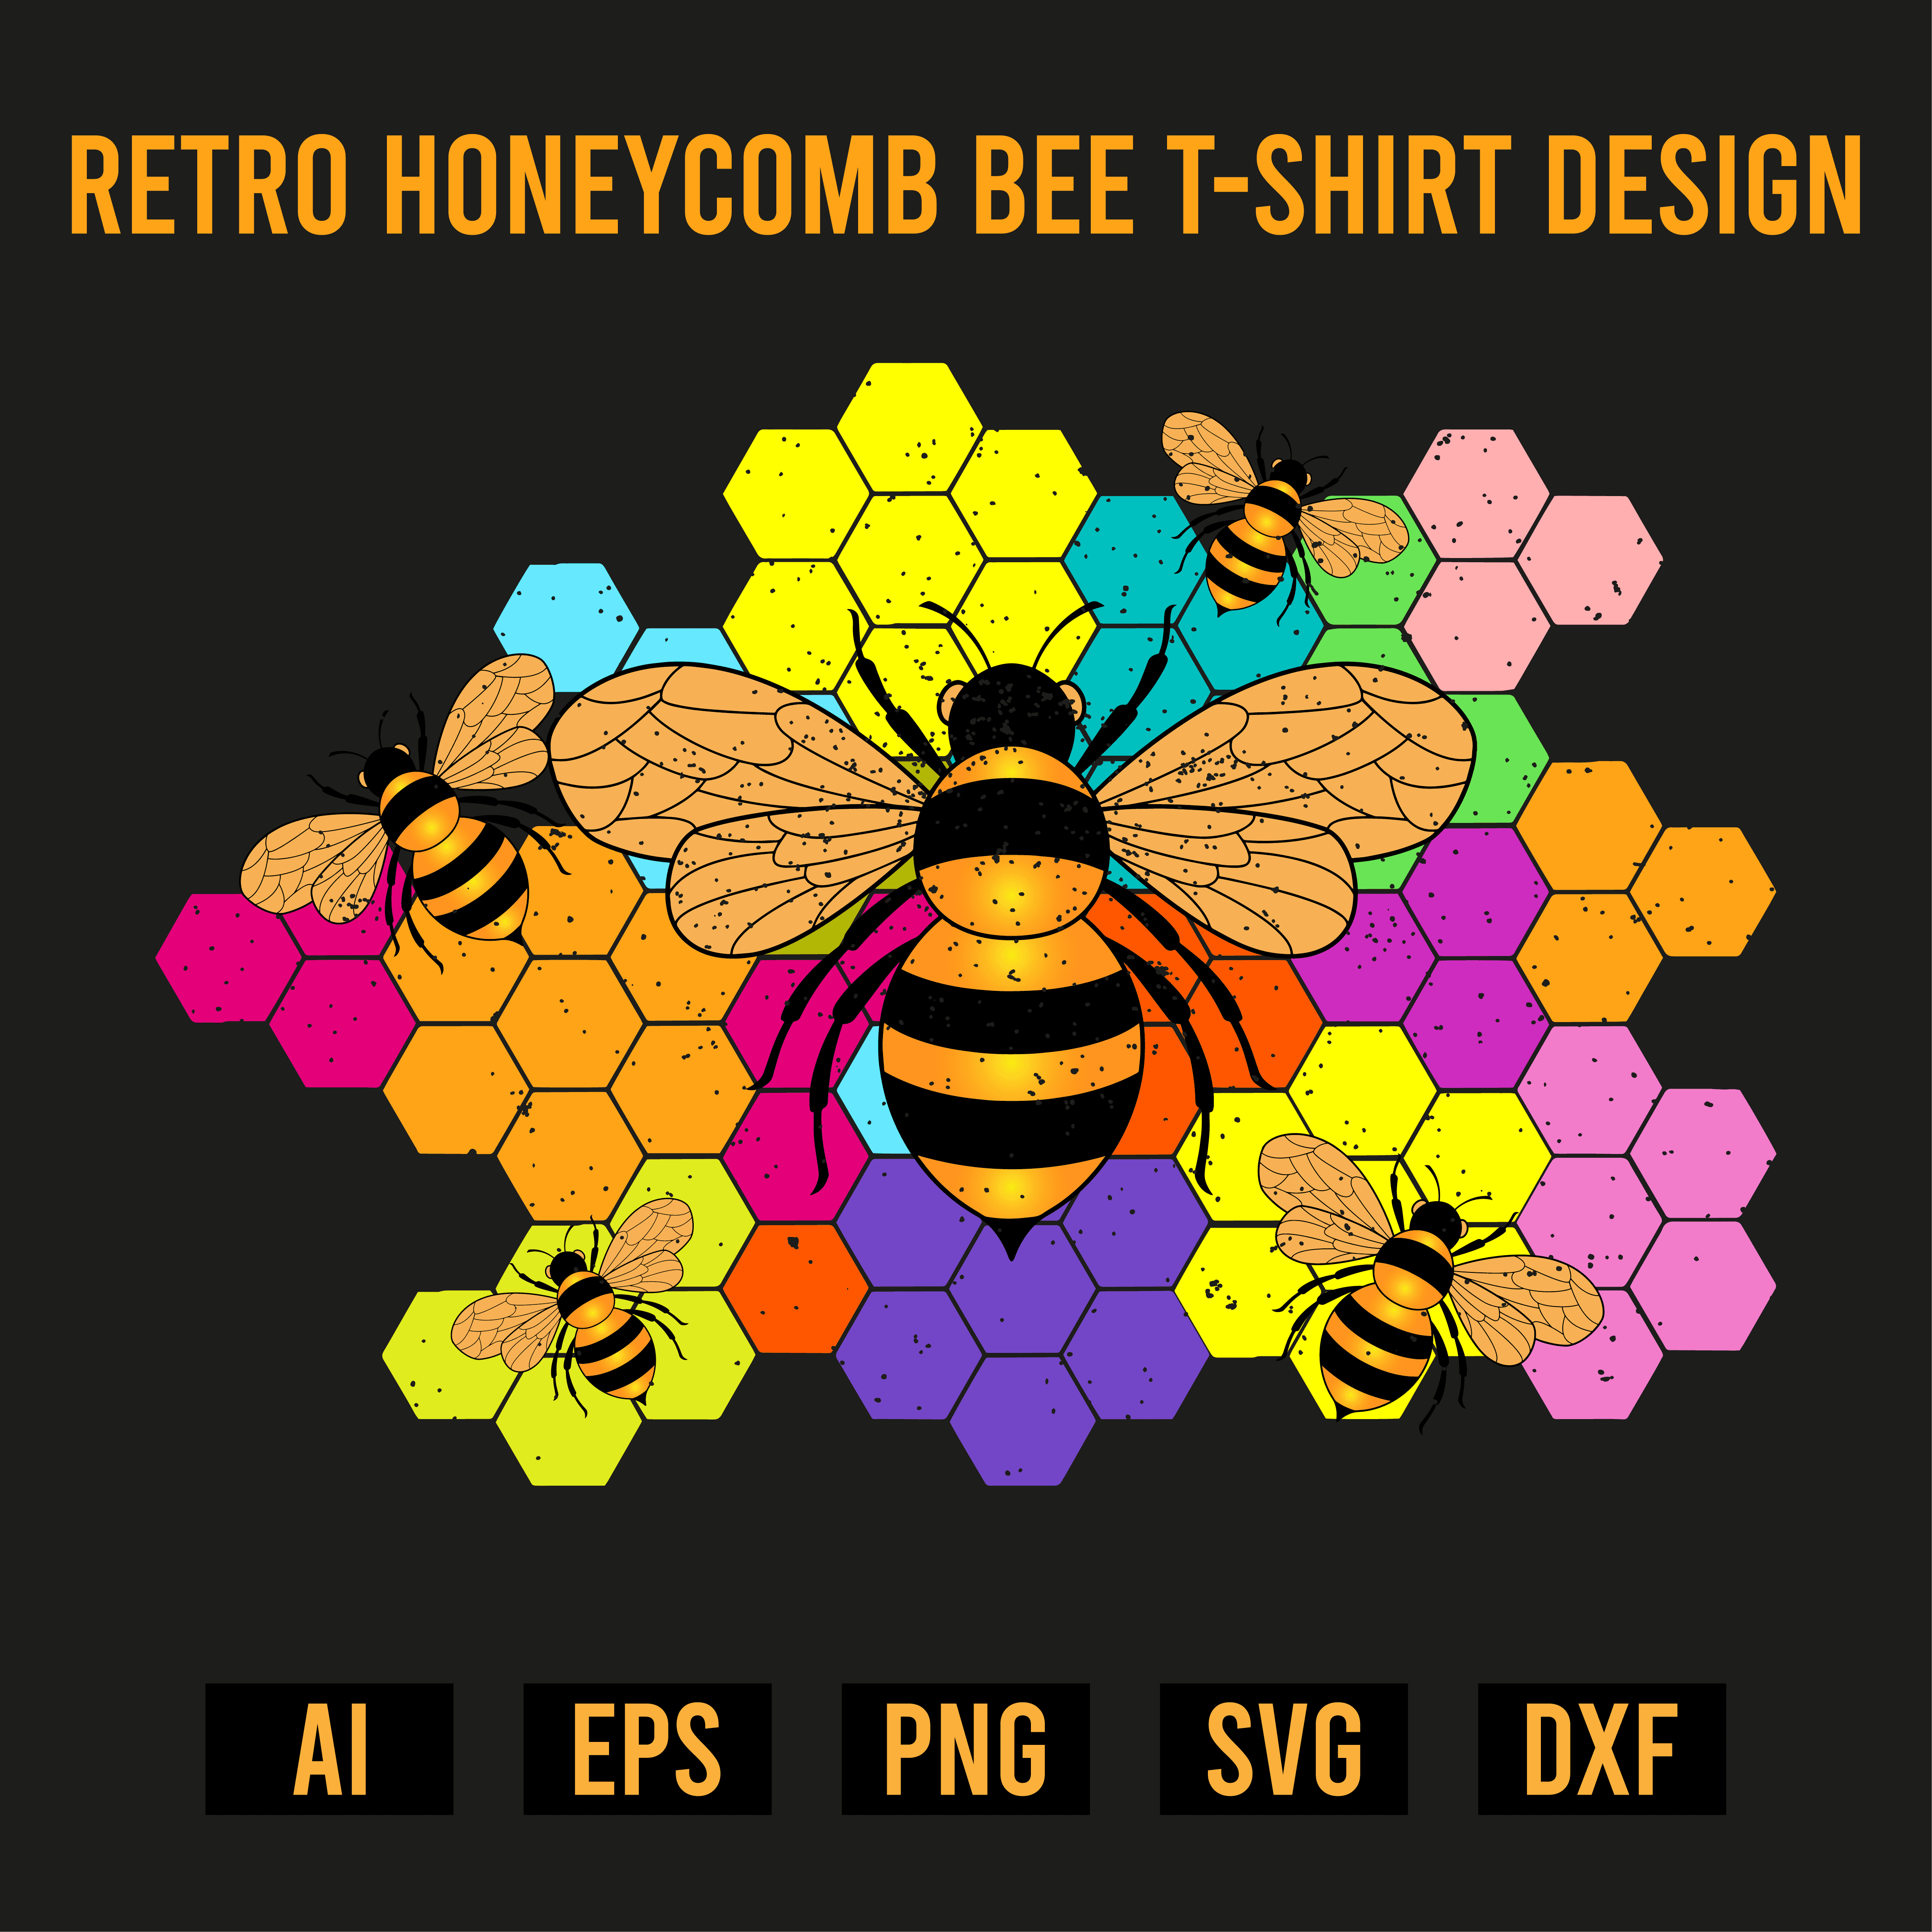 Retro Honeycomb Bee T- Shirt Design cover image.